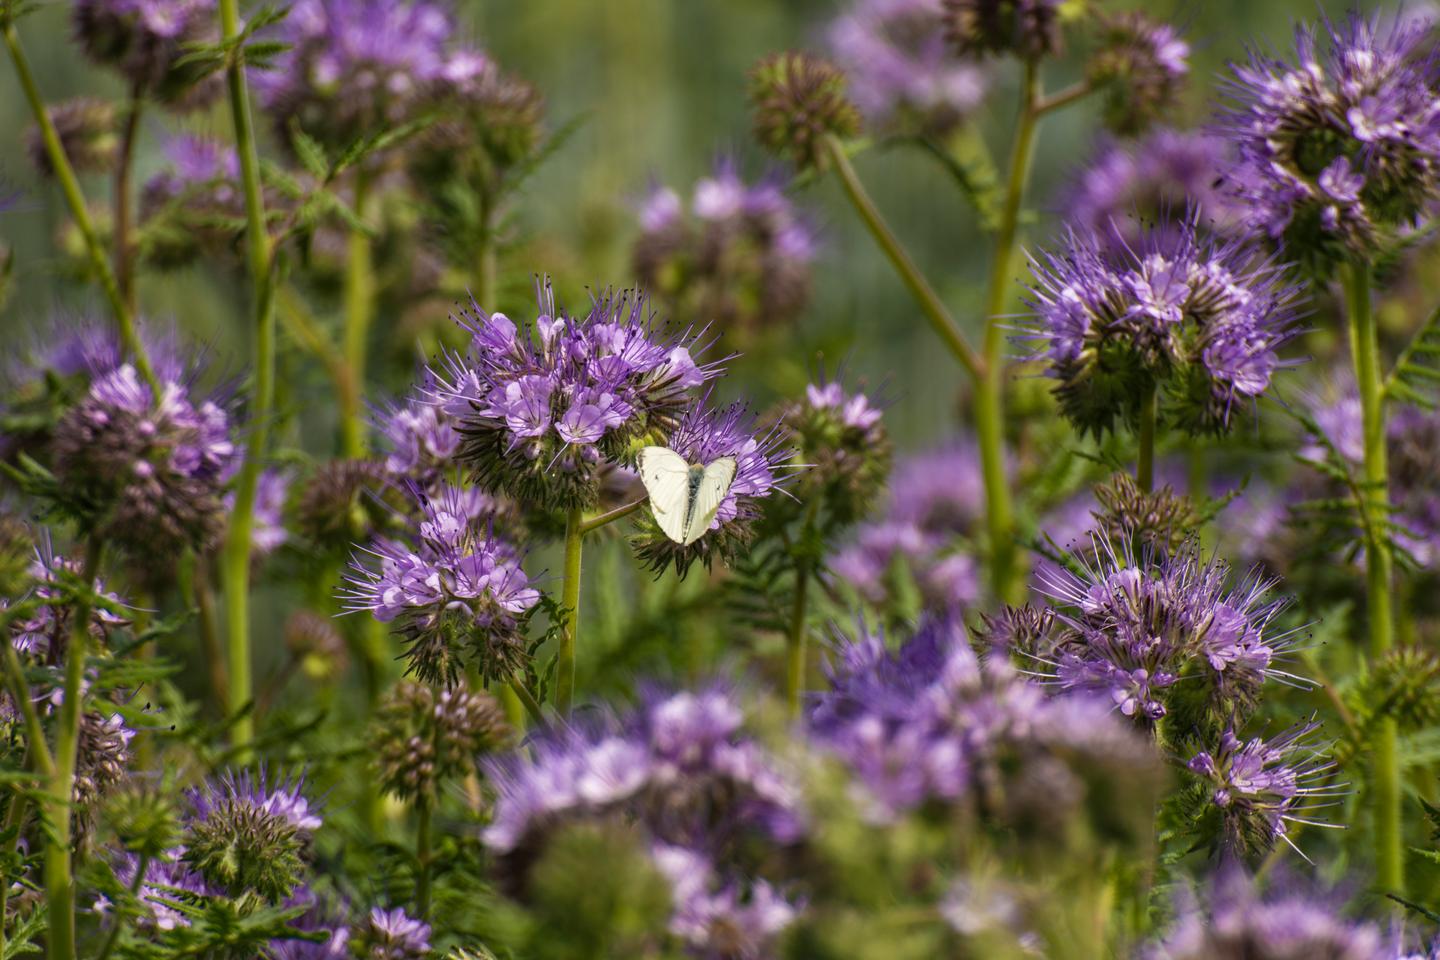 Lila blühende Phacelia Pflanzen mit Schmetterling